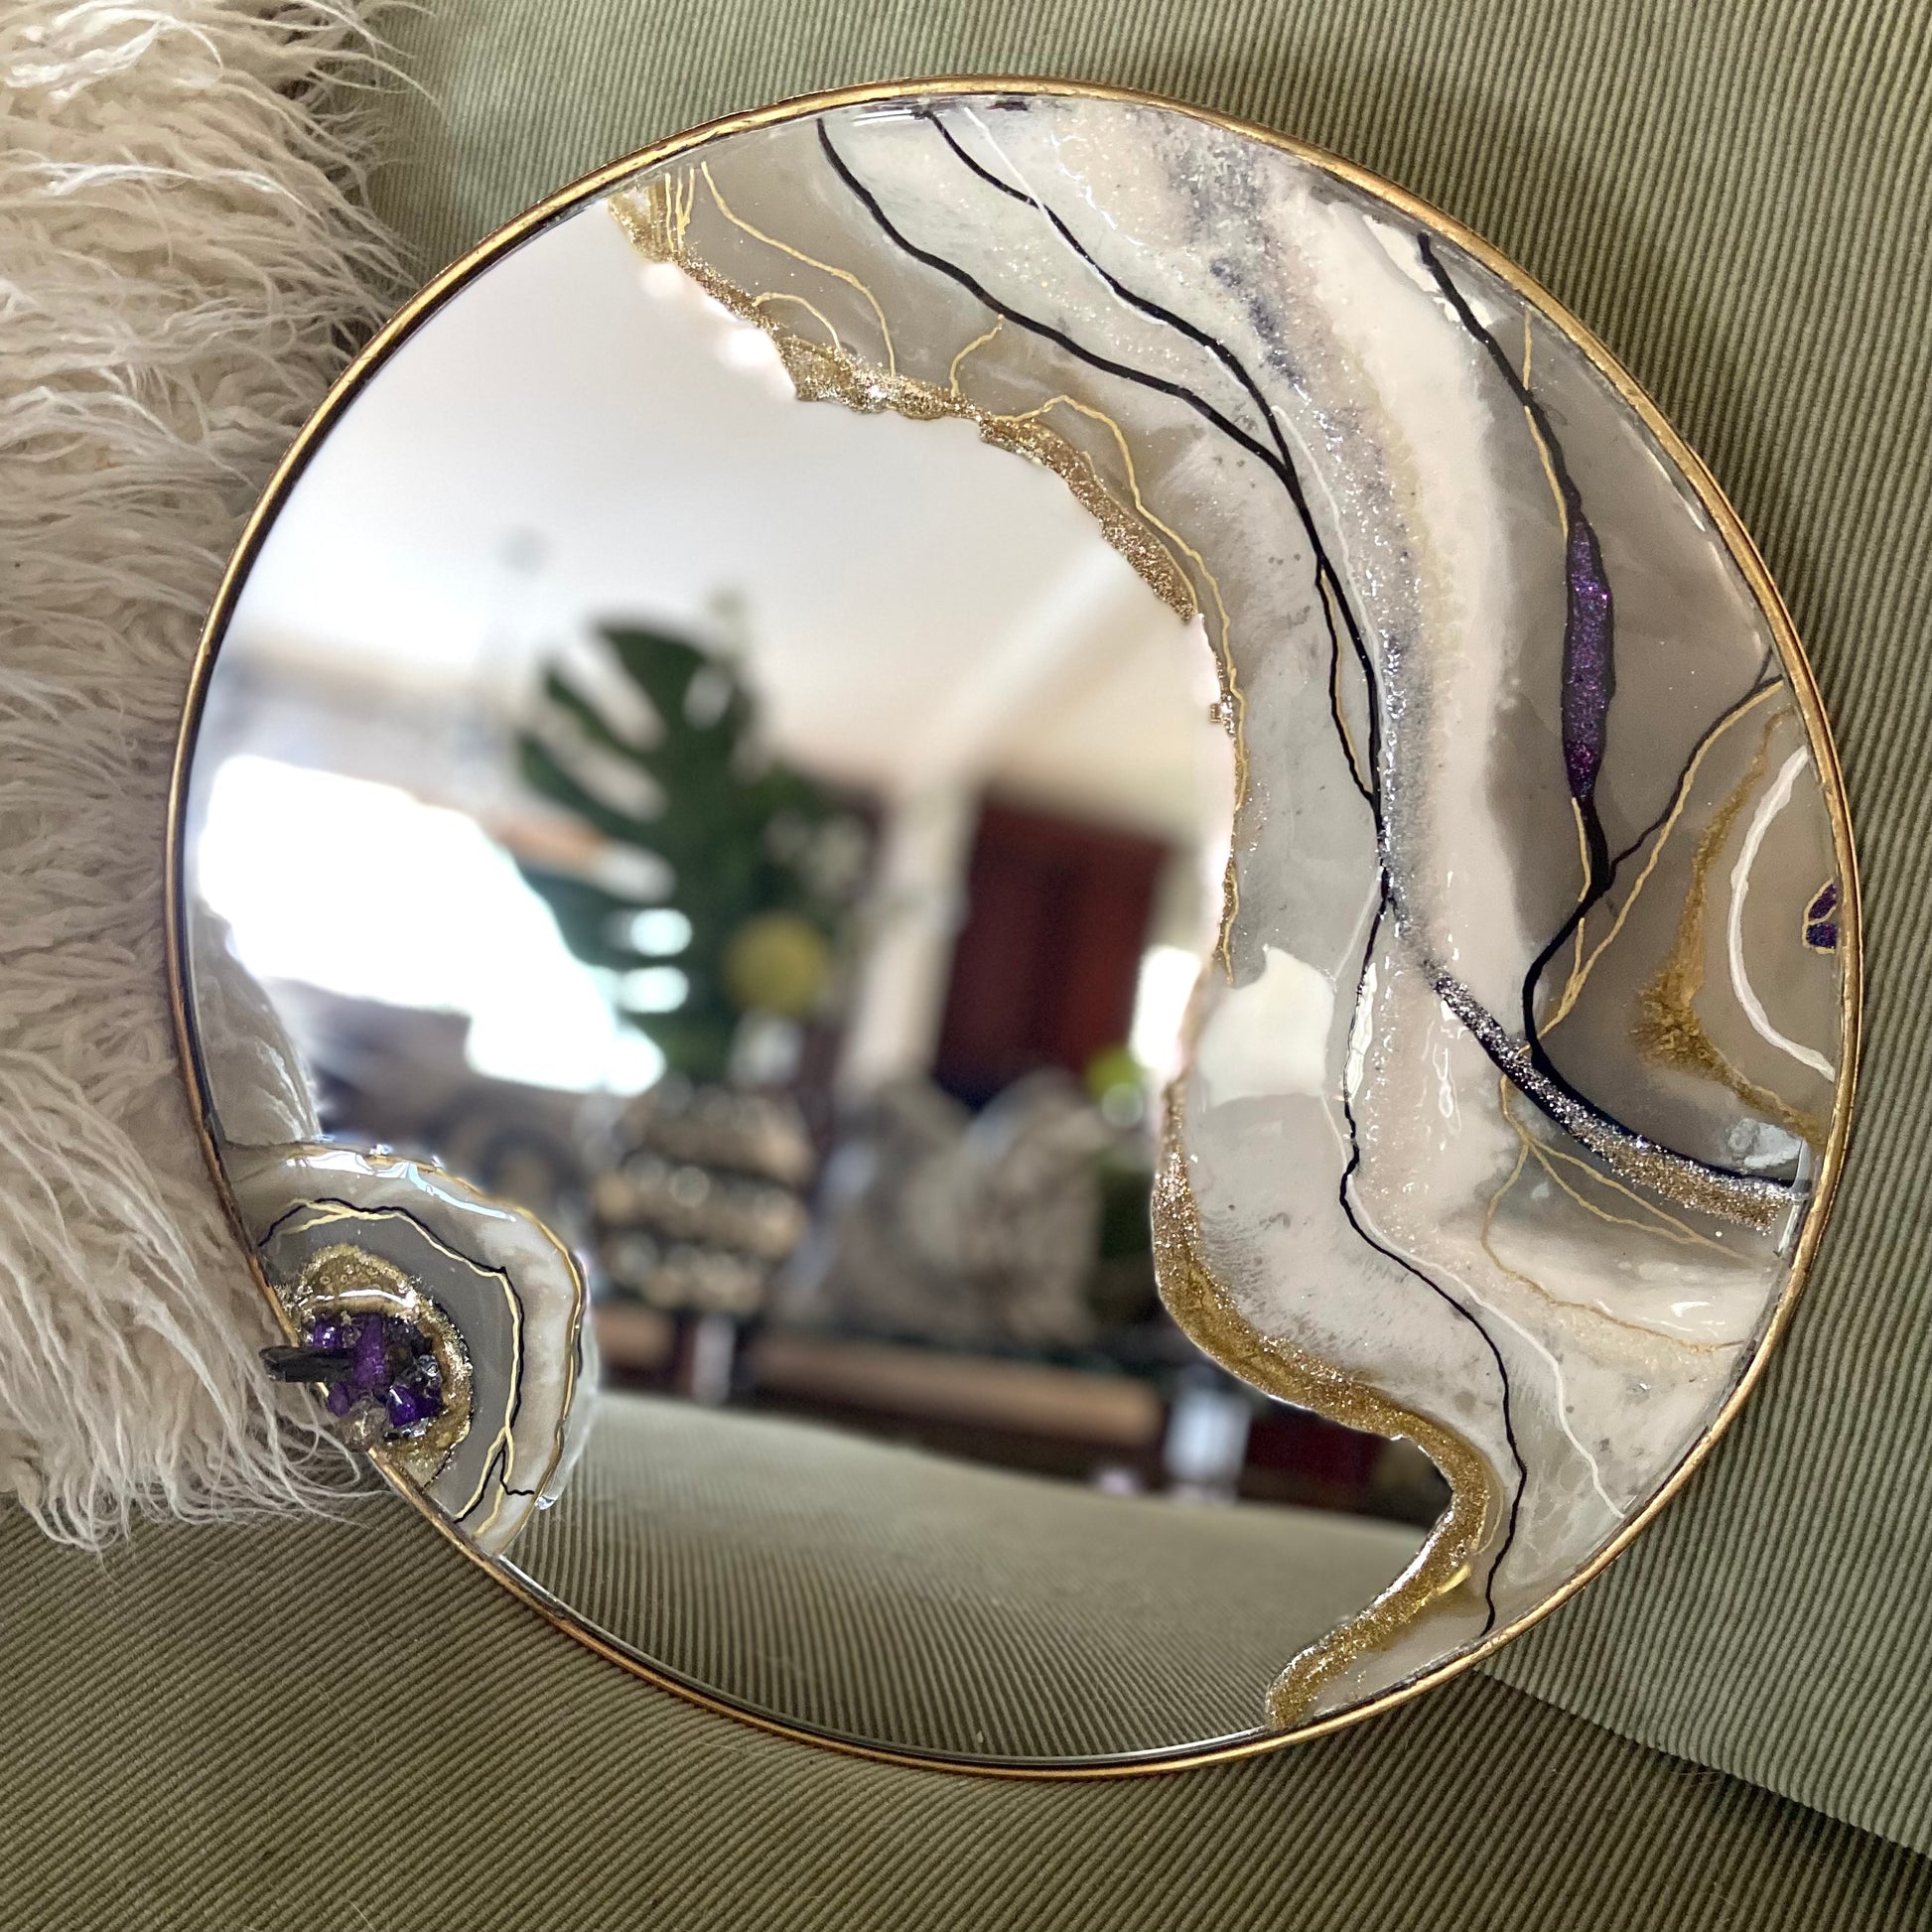 Agate round mirror in neutral colors with quartz  - Mamota Creative